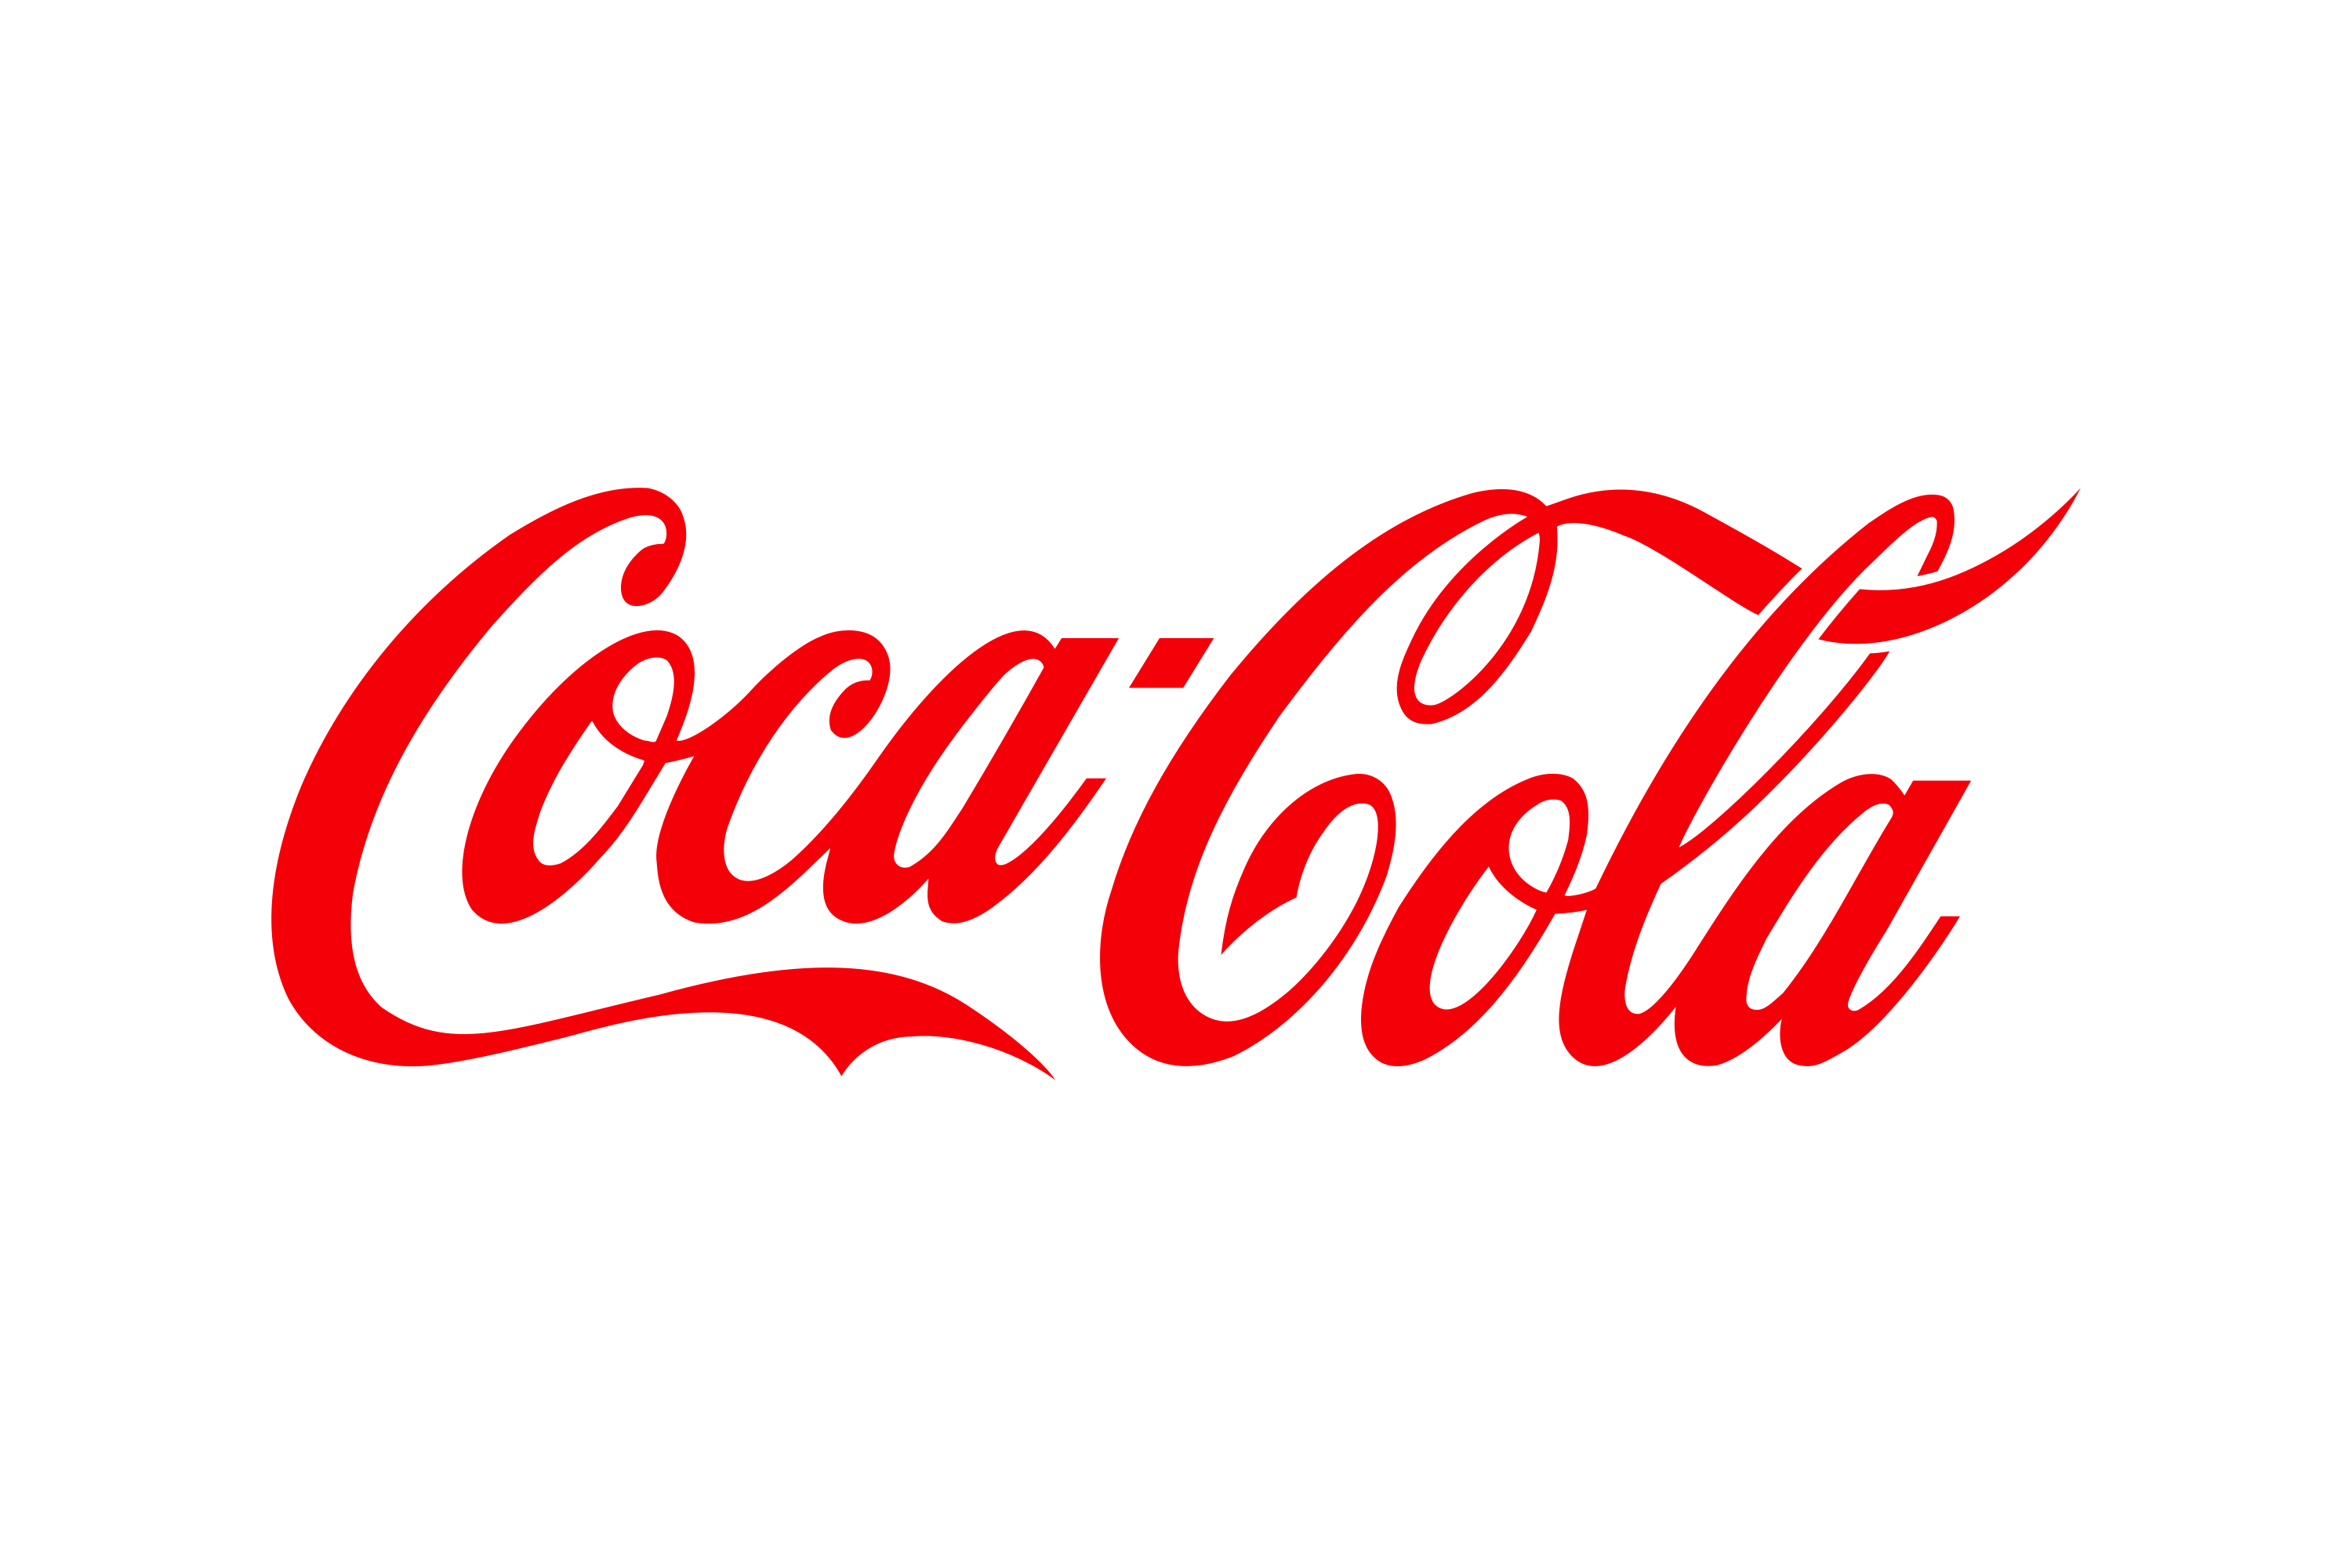 coca-cola-coke-logo-download-photoshop-tutorials